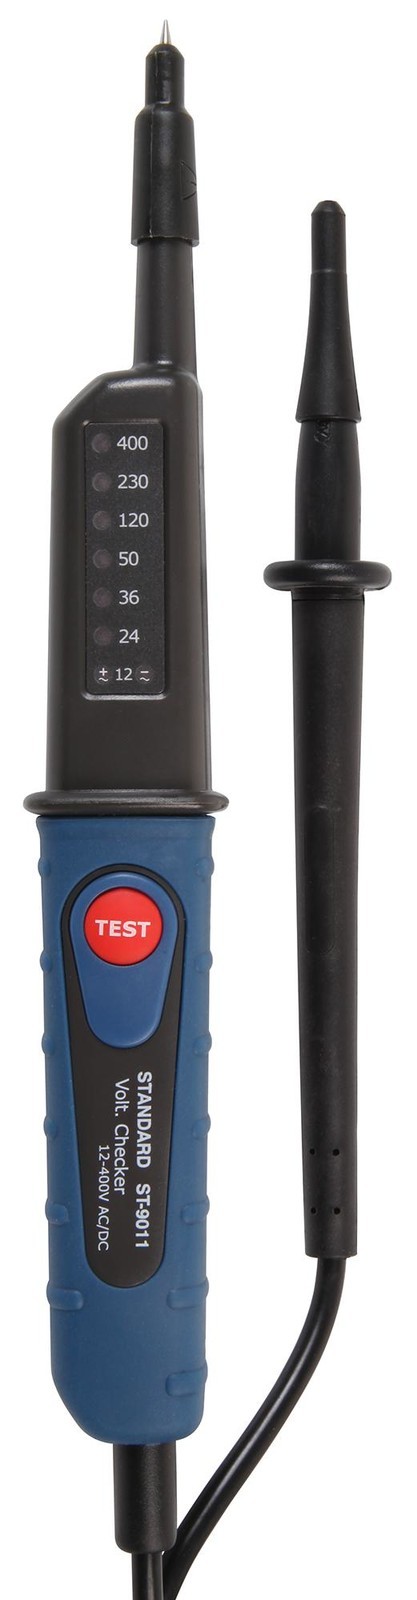 Tenma Ten01059 Voltage Tester